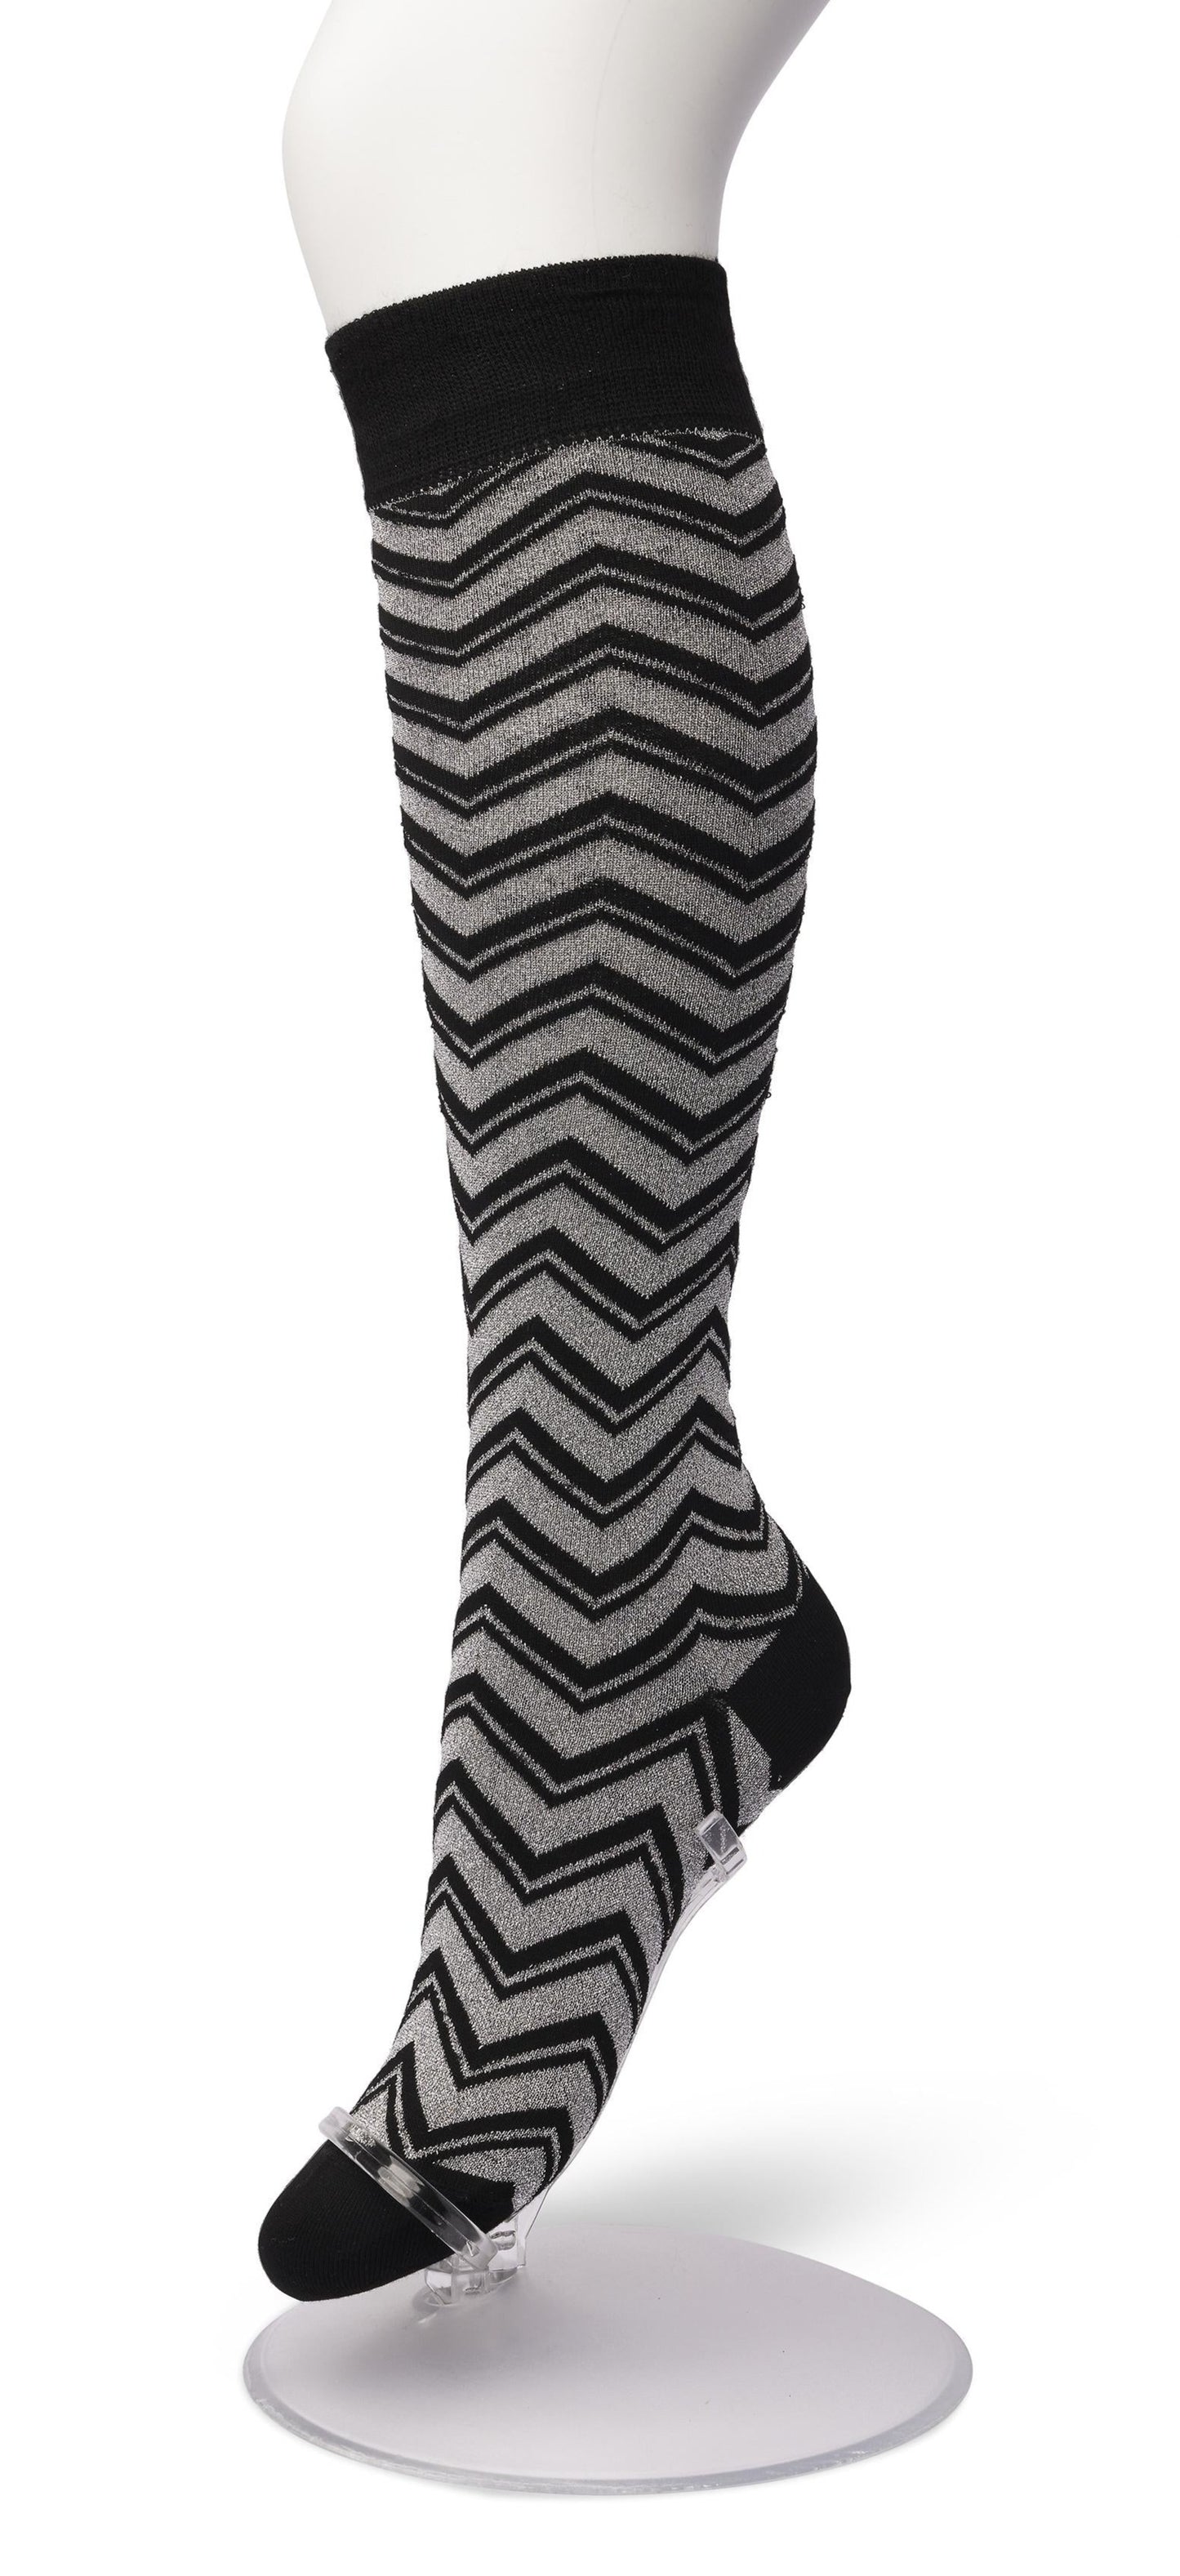 Bonnie Doon LL201501 Glittering Zig Zag Knee-high - Black cotton knee-high socks with a silver sparkly metallic zig-zag pattern, elasticated comfort cuff, shaped heel and flat toe seams.